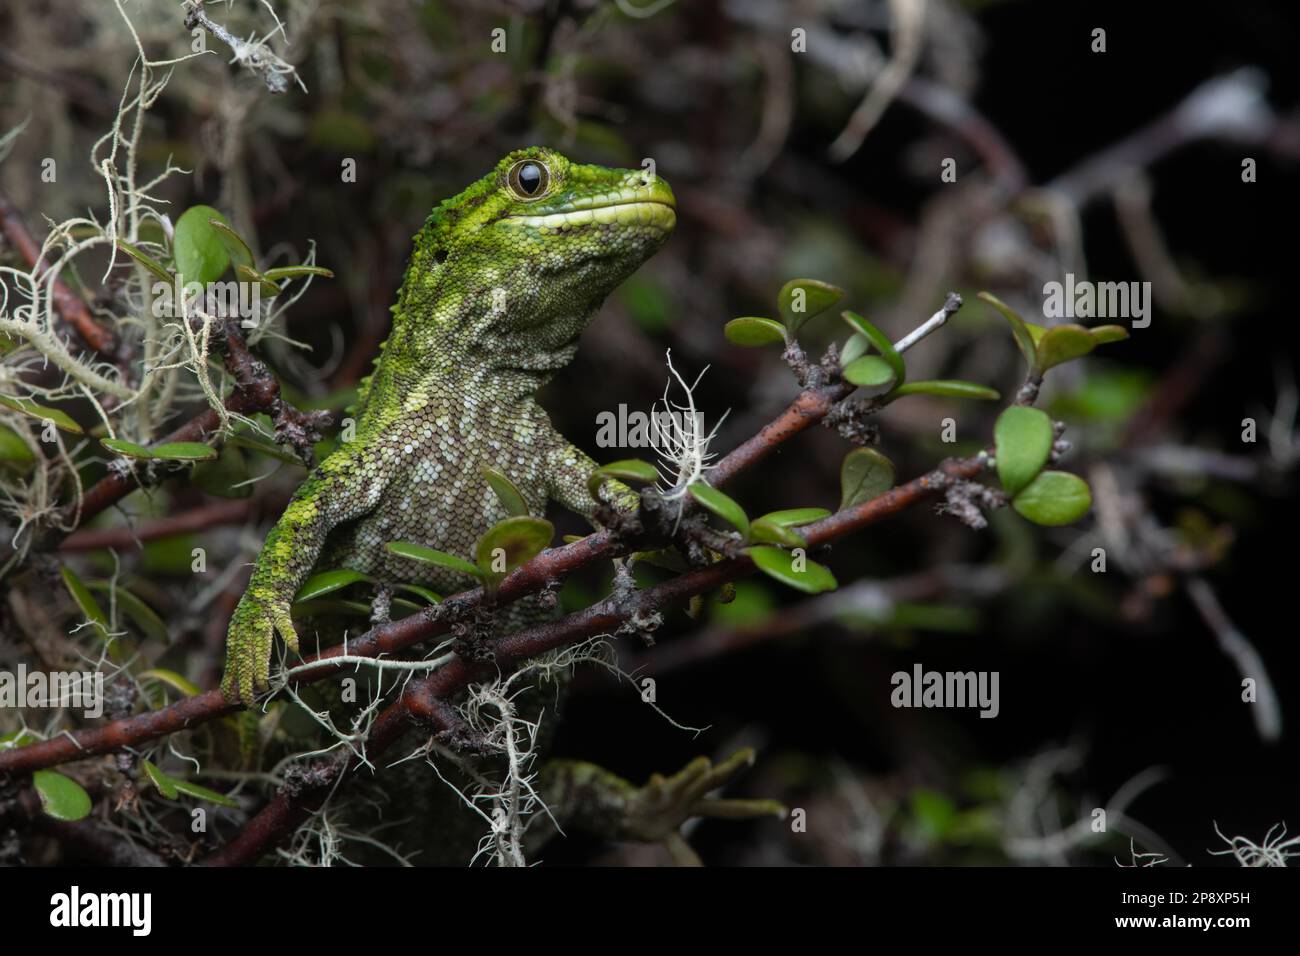 A close up portrait of a rough gecko (Naultinus rudis) endemic to Aotearoa New Zealand. Stock Photo